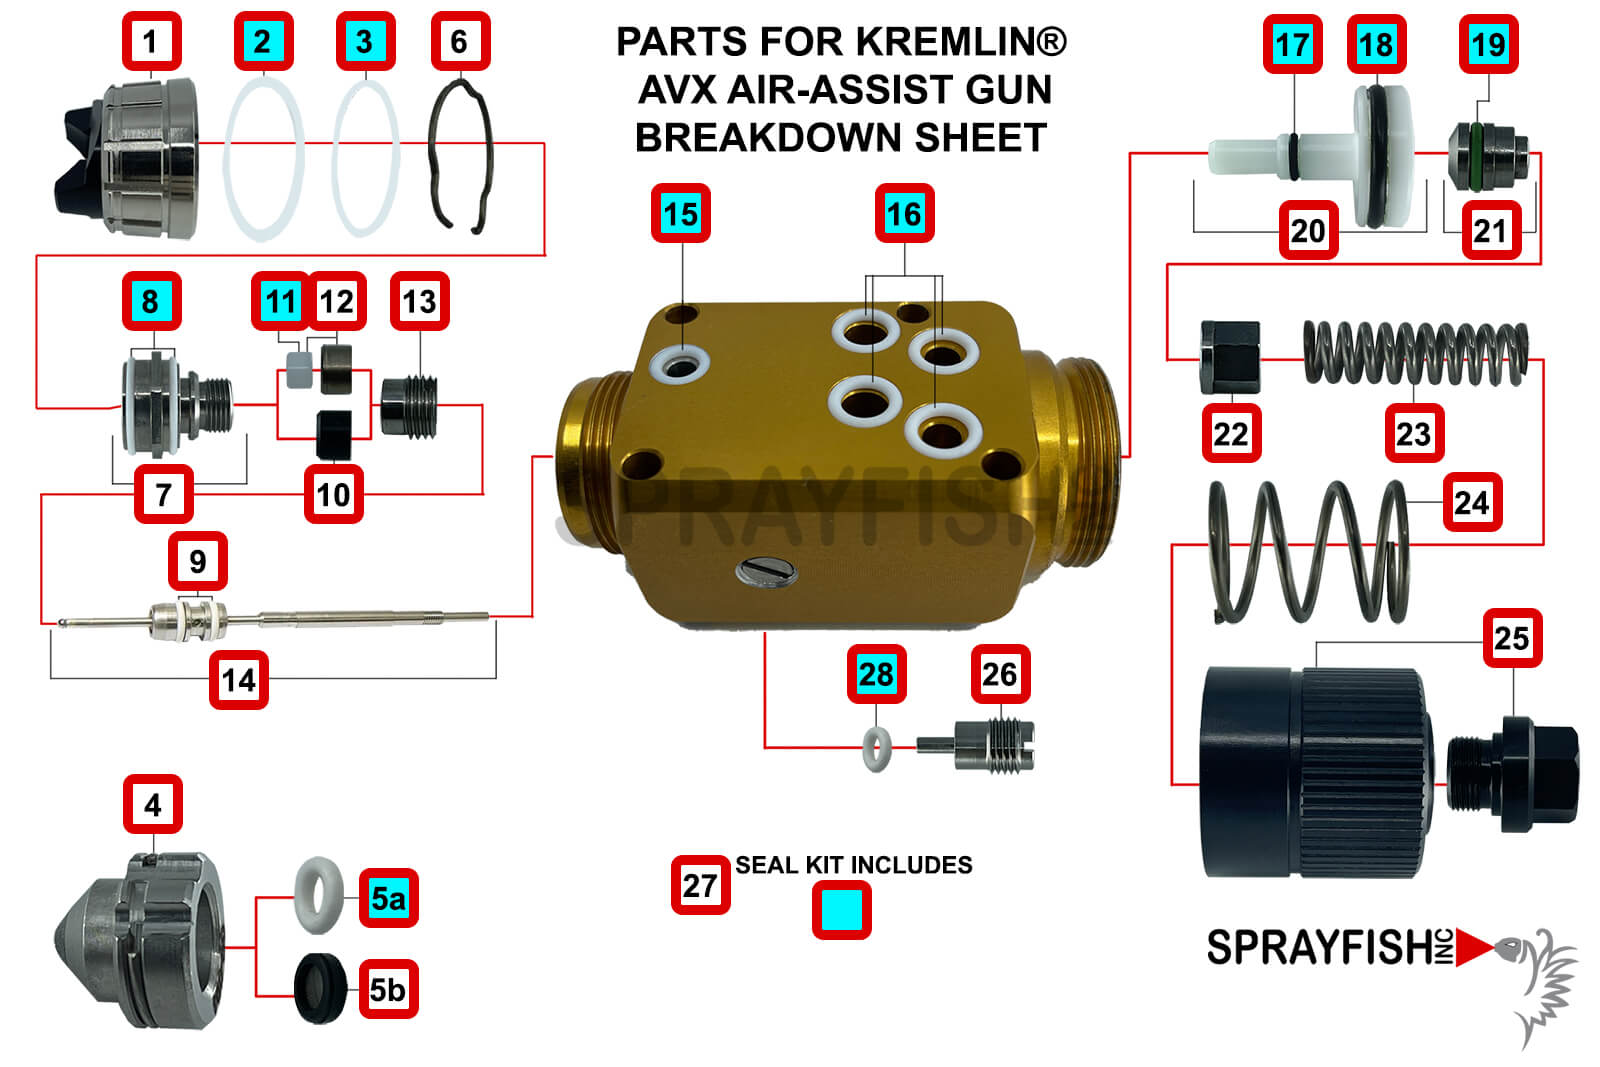 Sprayfish Spare Parts for Kremlin® AVX Automatic Gun Breakdown Sheet